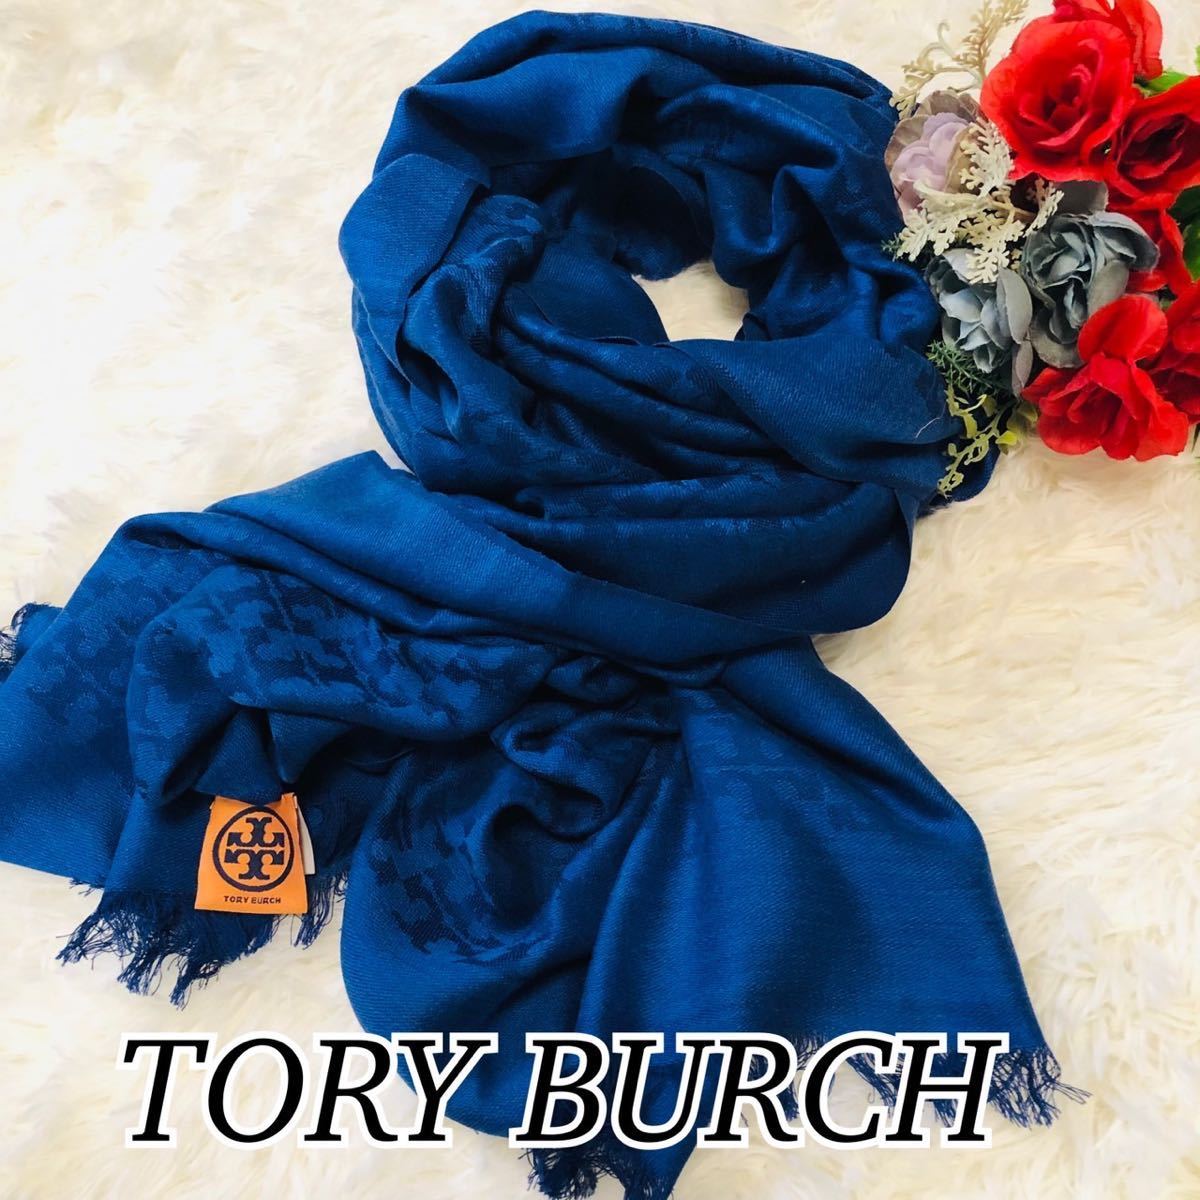 TORYBURCH トリーバーチ レディース 女性 マフラー 大判 ストール ブルー 青 Blue ロゴ 総柄 美品 未使用に近い サイズ 68×200cm_画像1